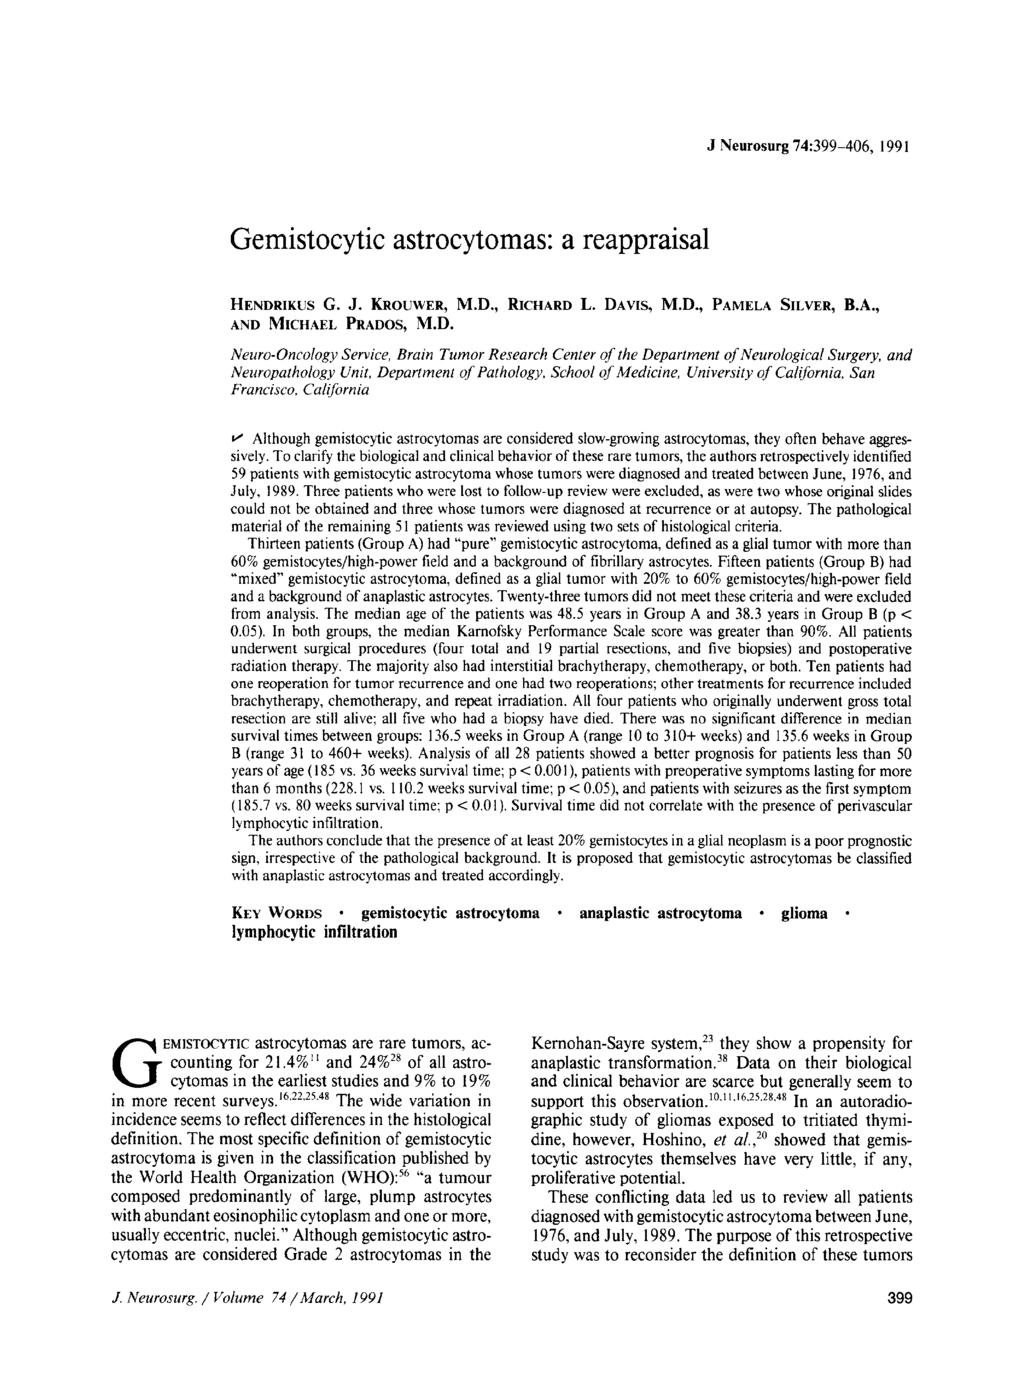 J Neurosurg 74:399-406, 1991 Gemistocytic astrocytomas: a reappraisal HENDR